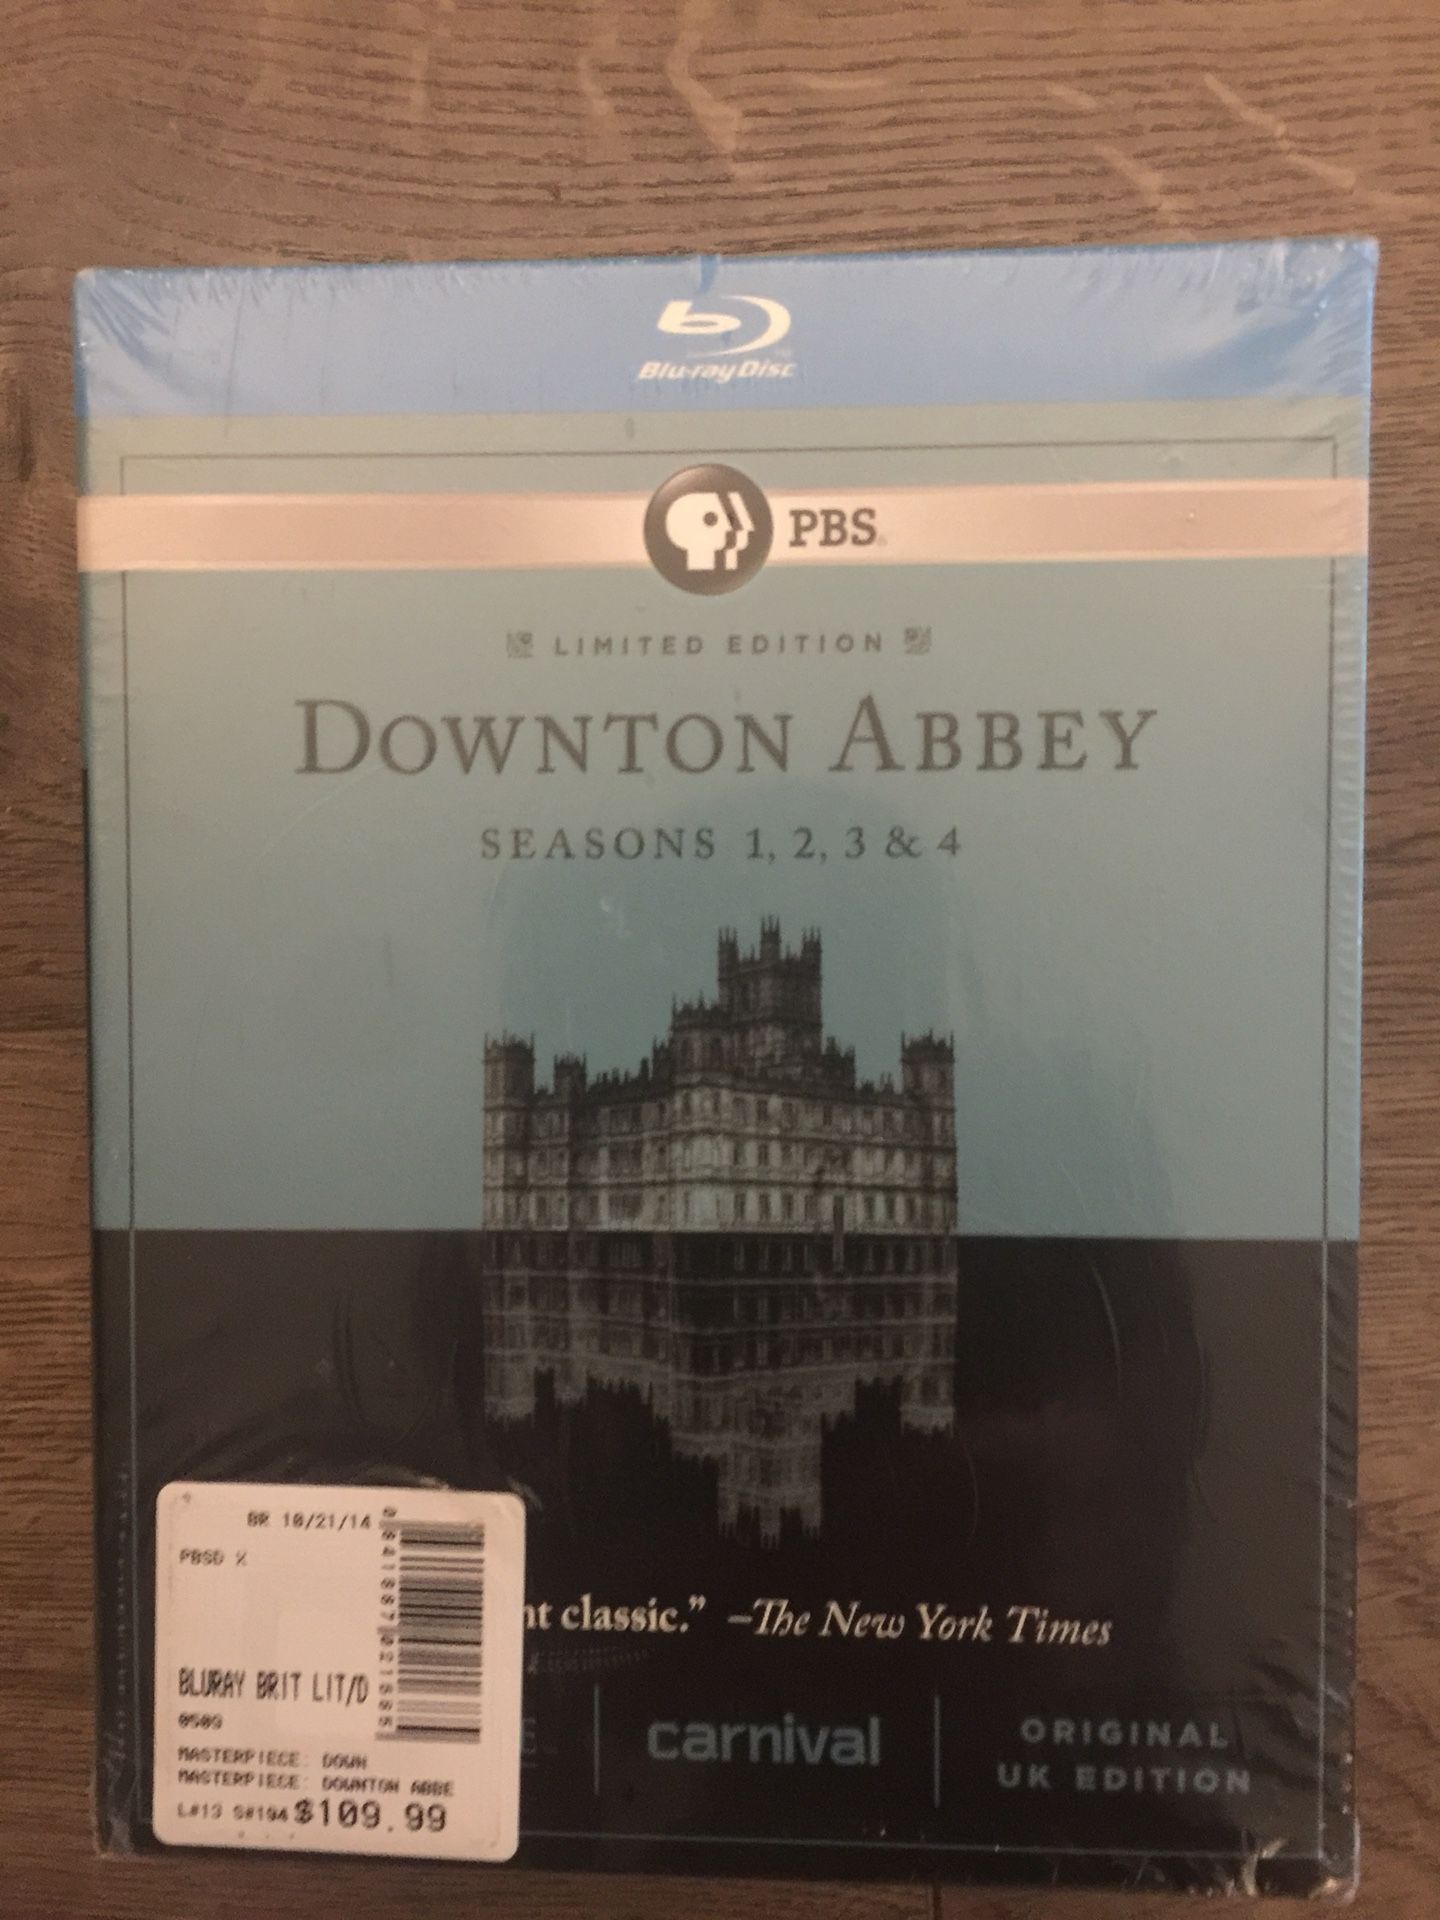 Downton Abbey Blu-ray DVD boxed set - Seasons 1,2,3, and 4